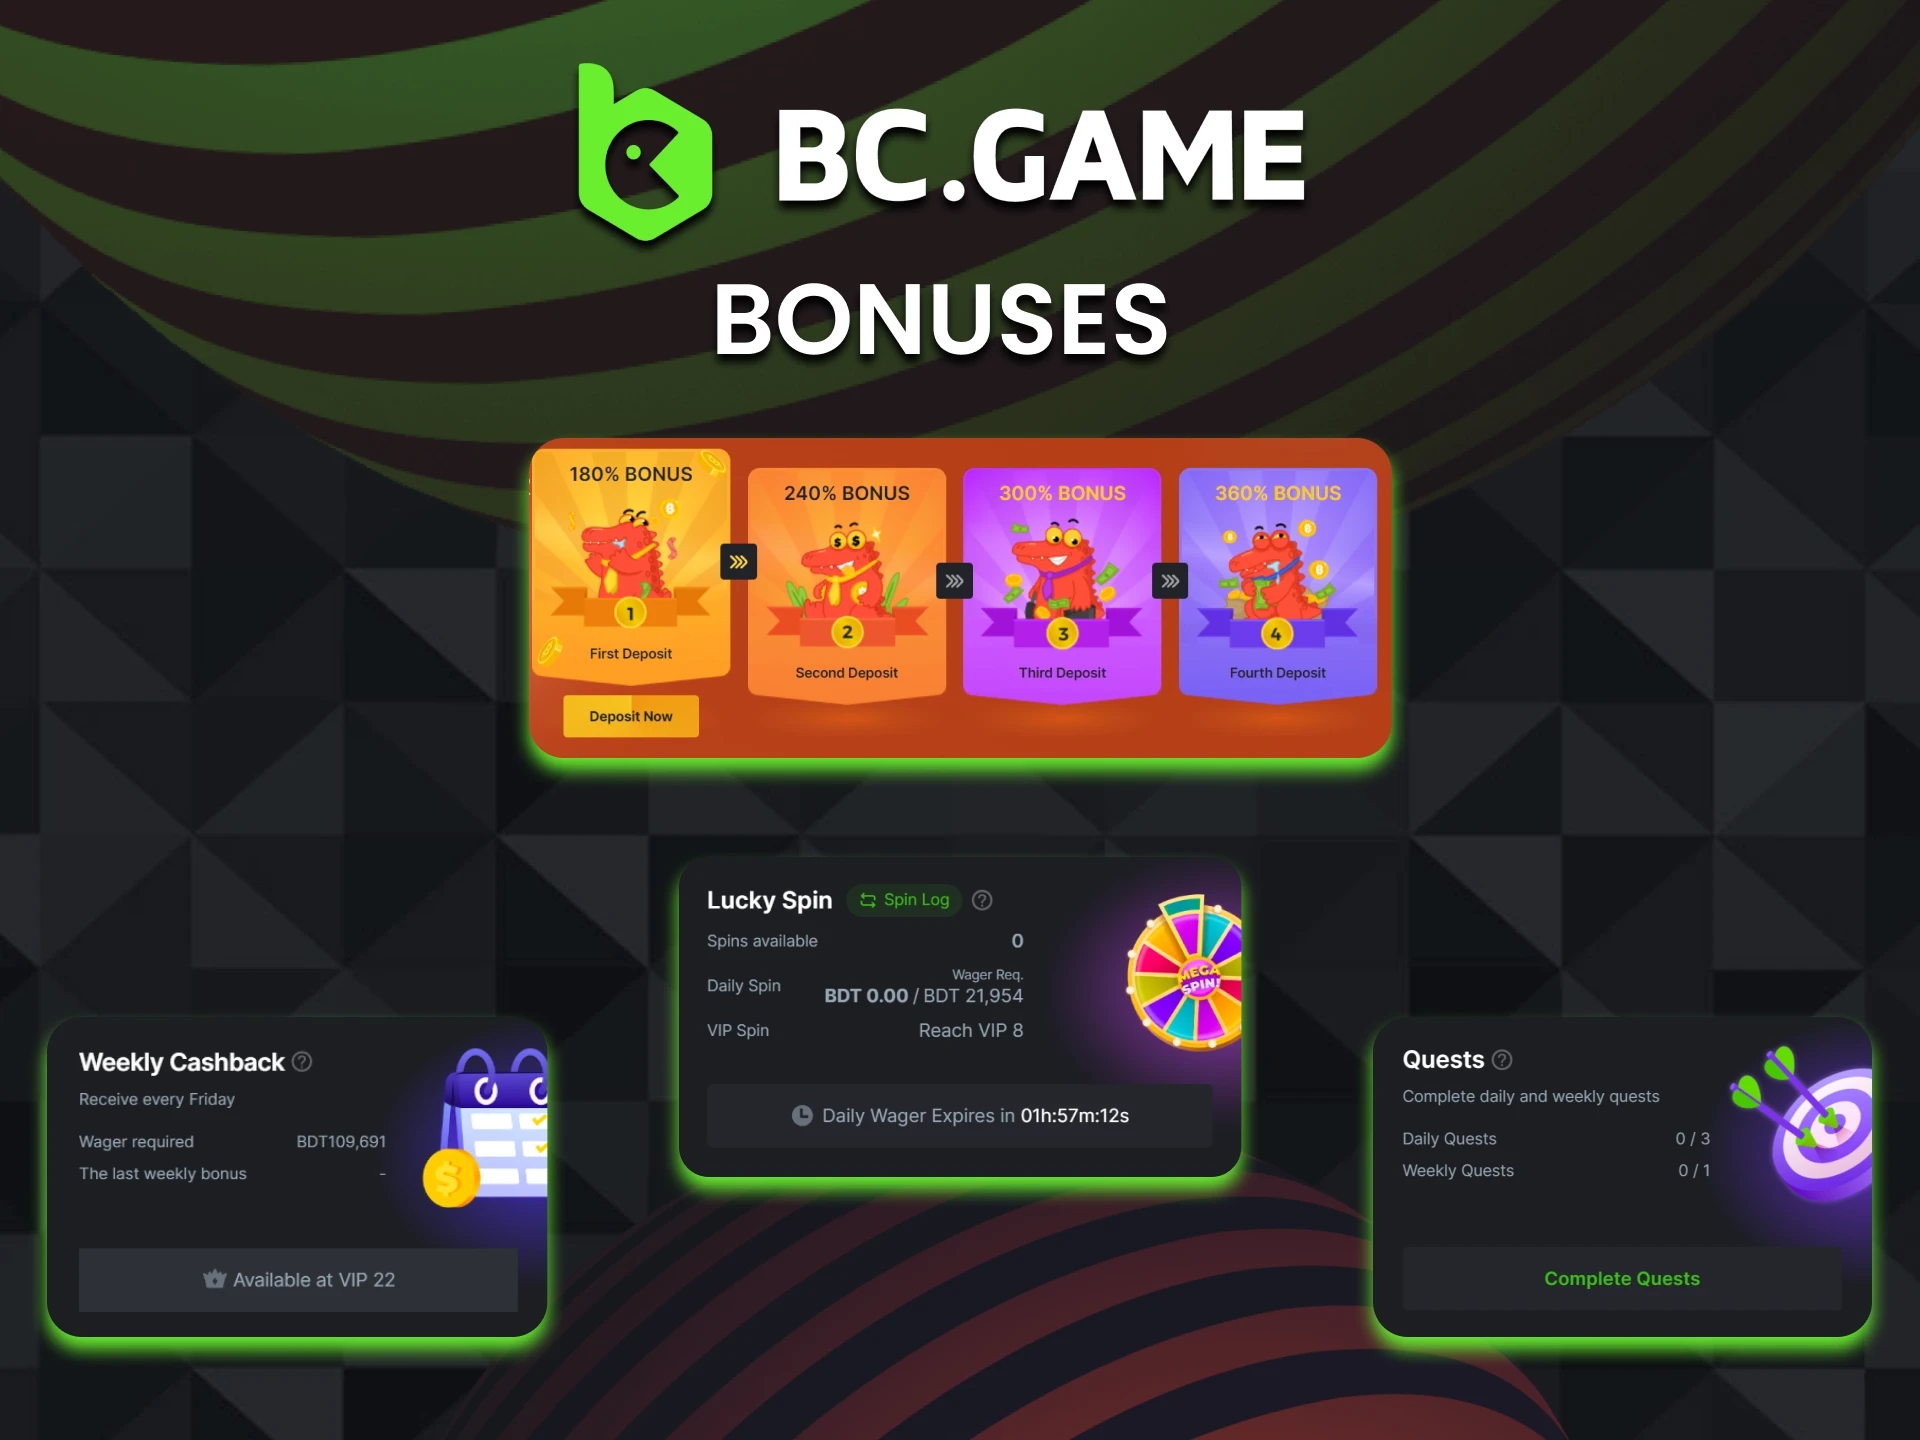 BC Game Casino gives many bonuses for playing slots.